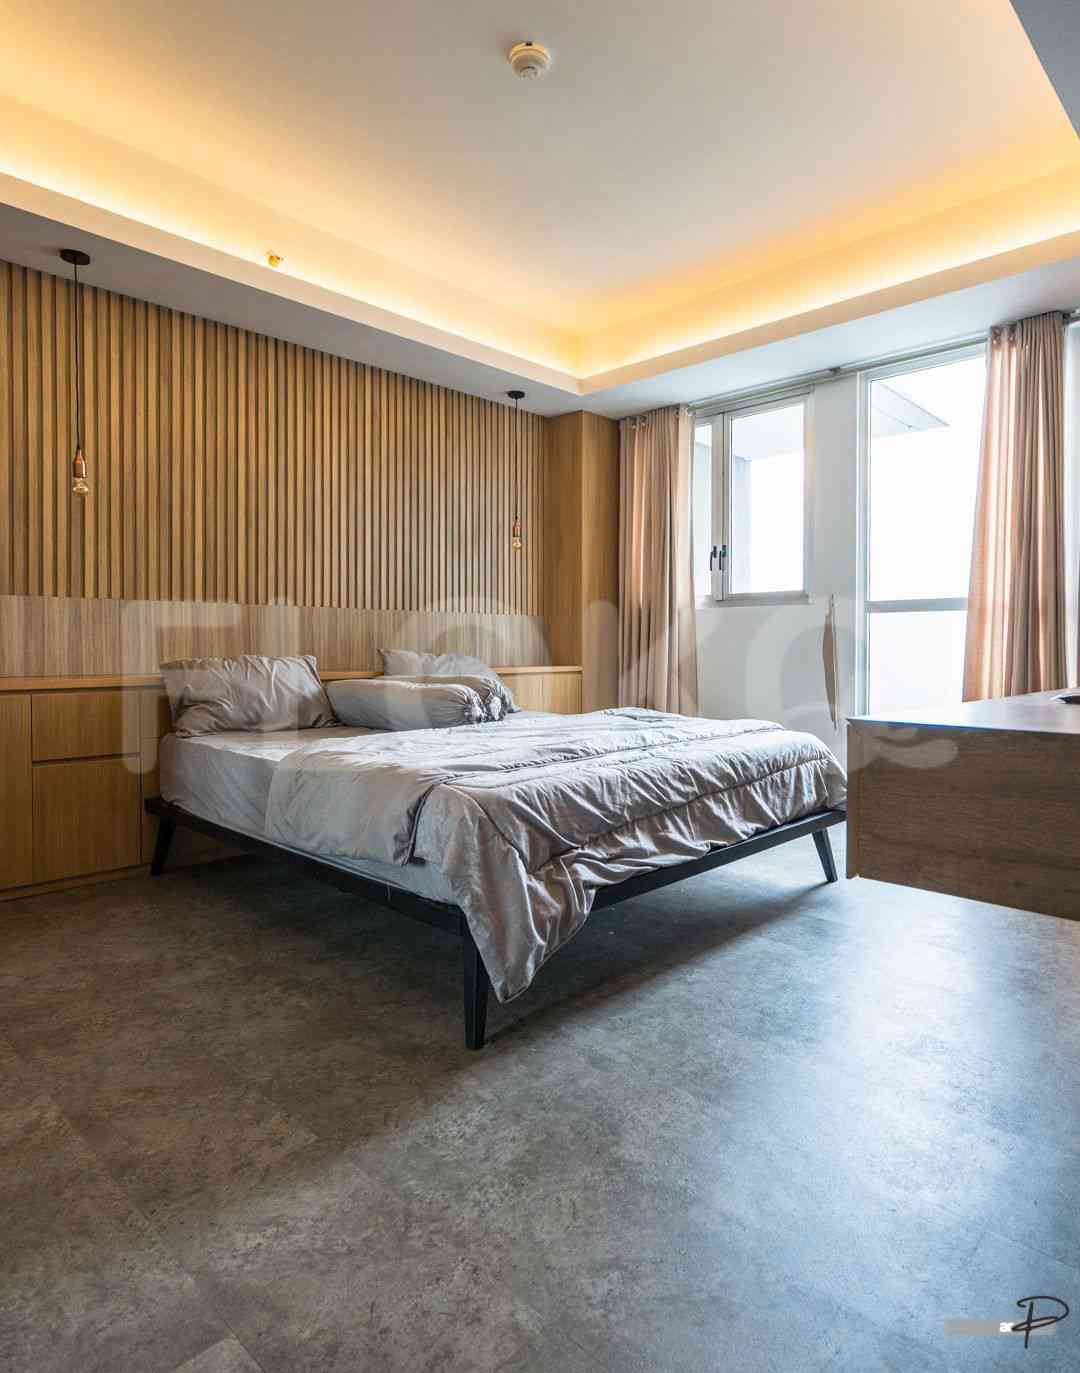 2 Bedroom on 20th Floor for Rent in Kemang Village Residence - fke7b0 10